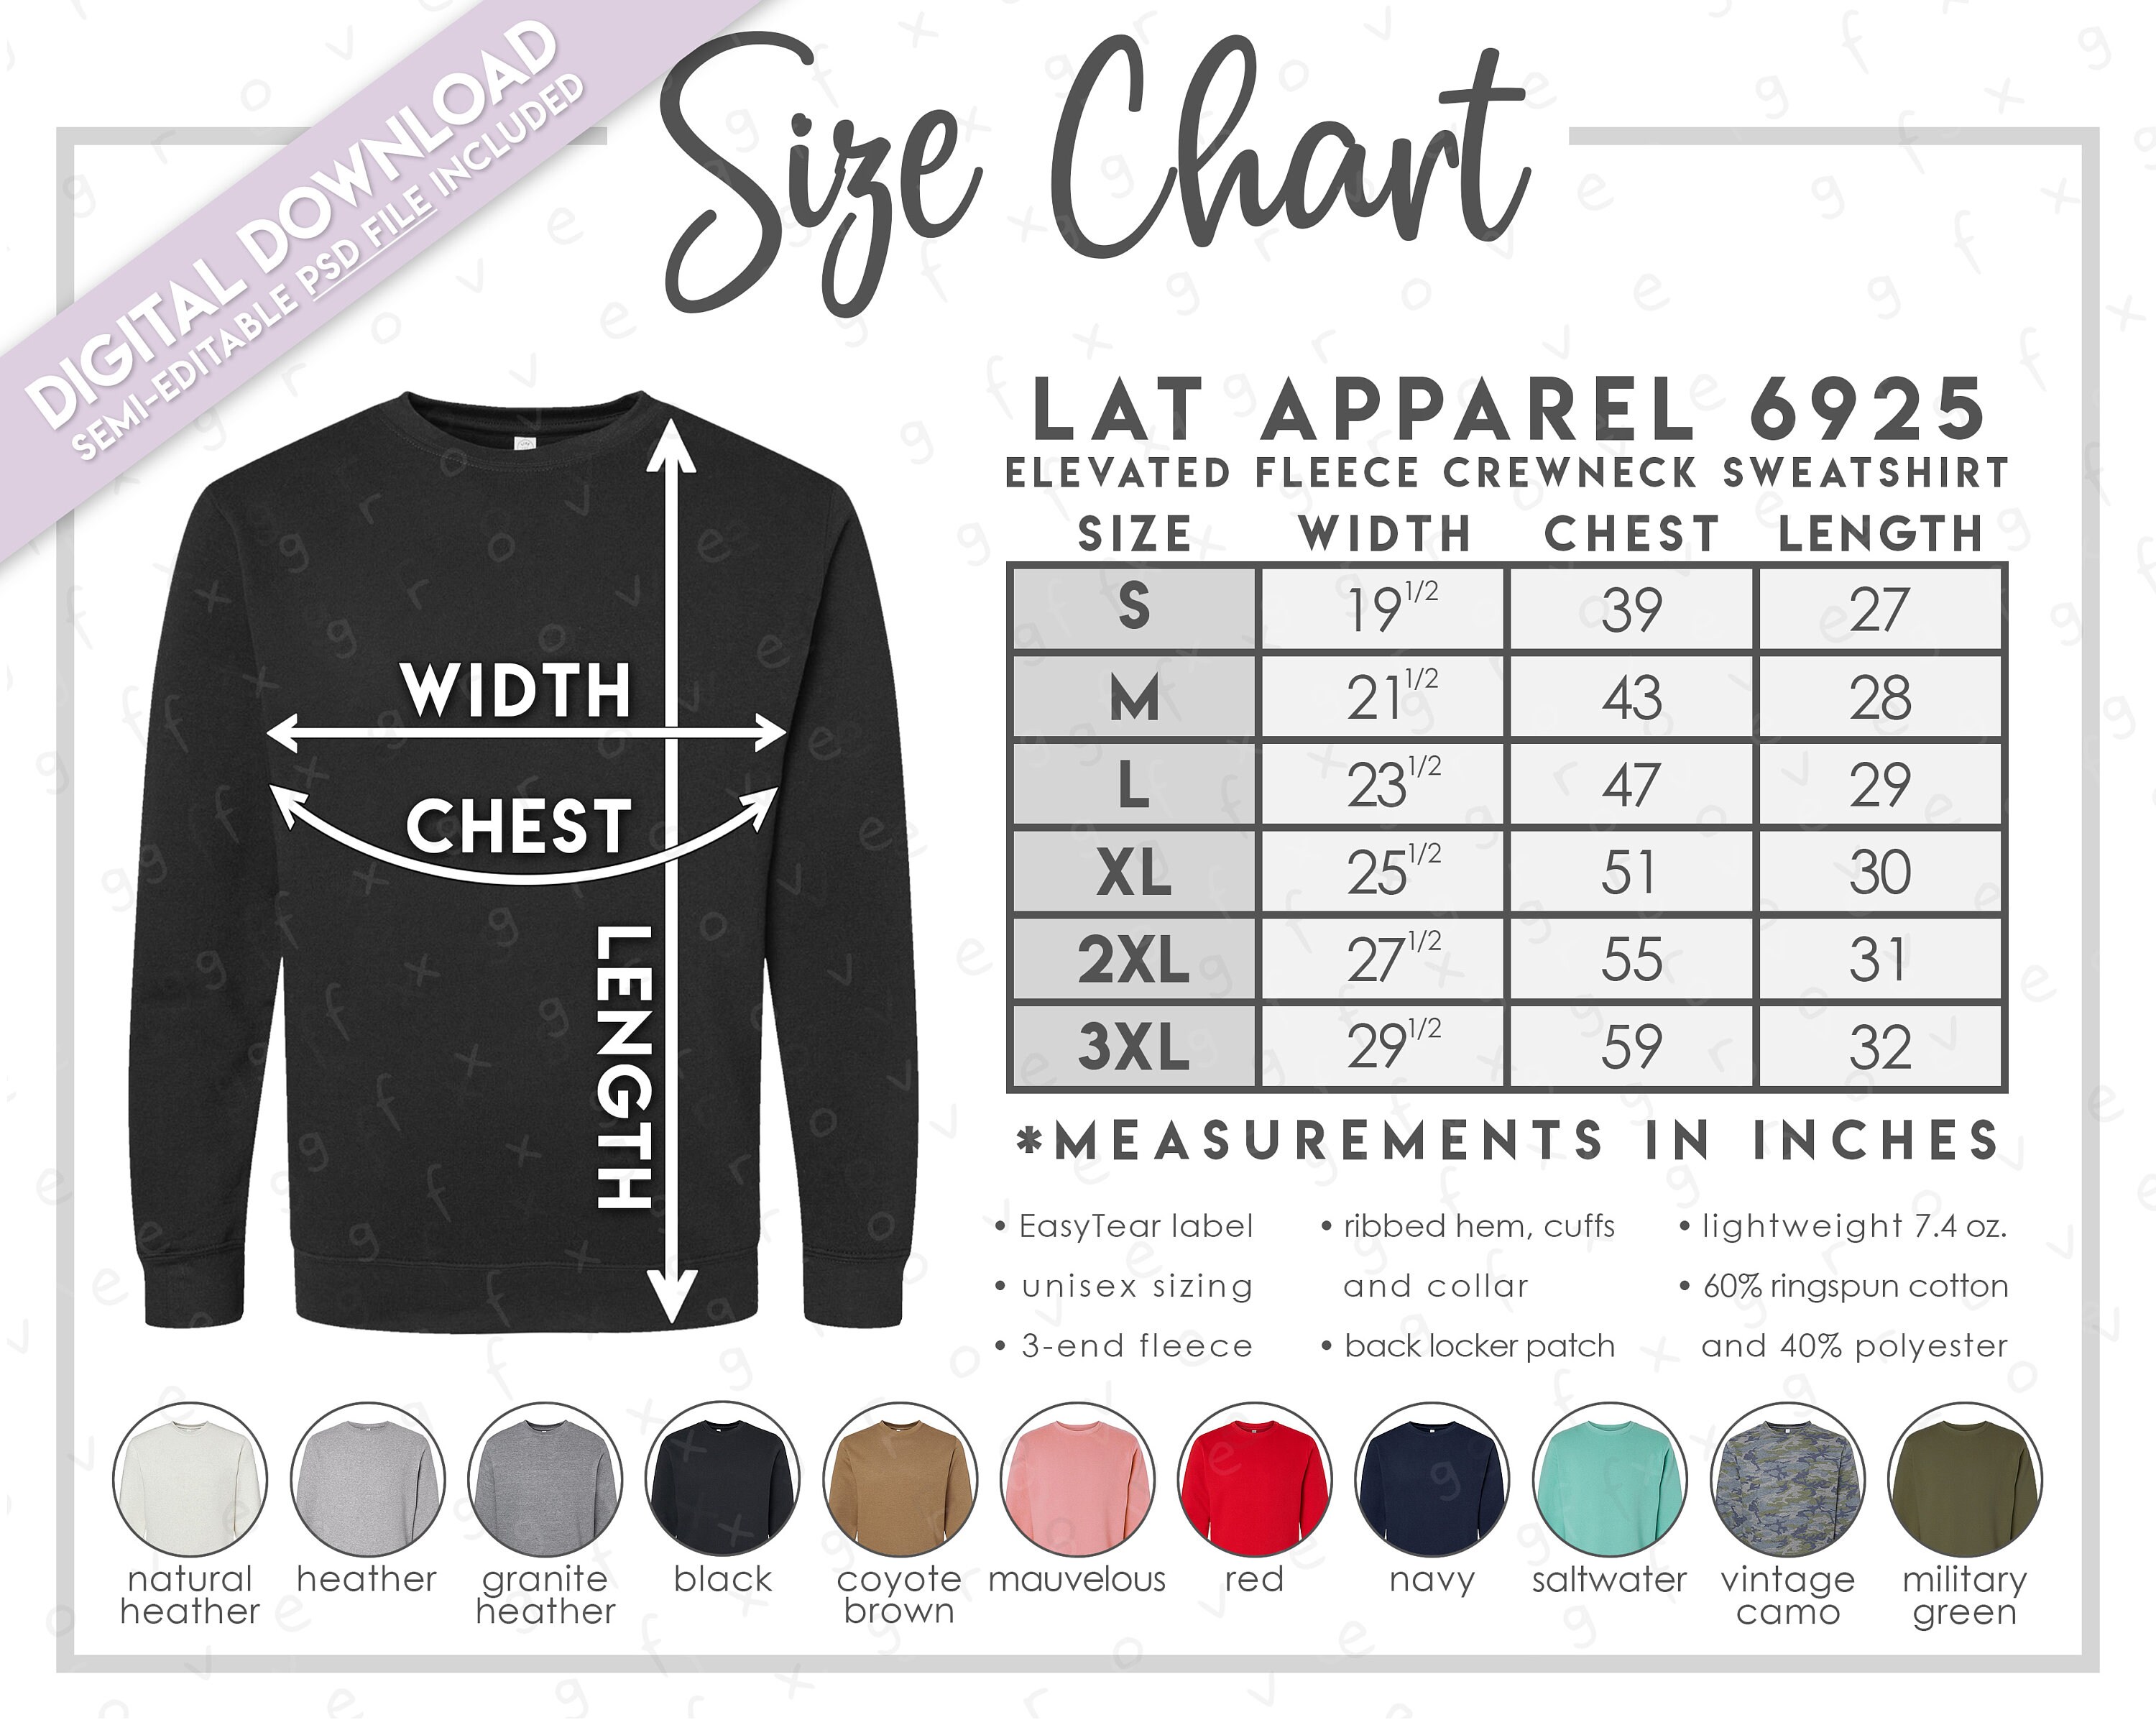 LAT - Elevated Fleece Crewneck Sweatshirt - 6925 - Navy - Size: S 